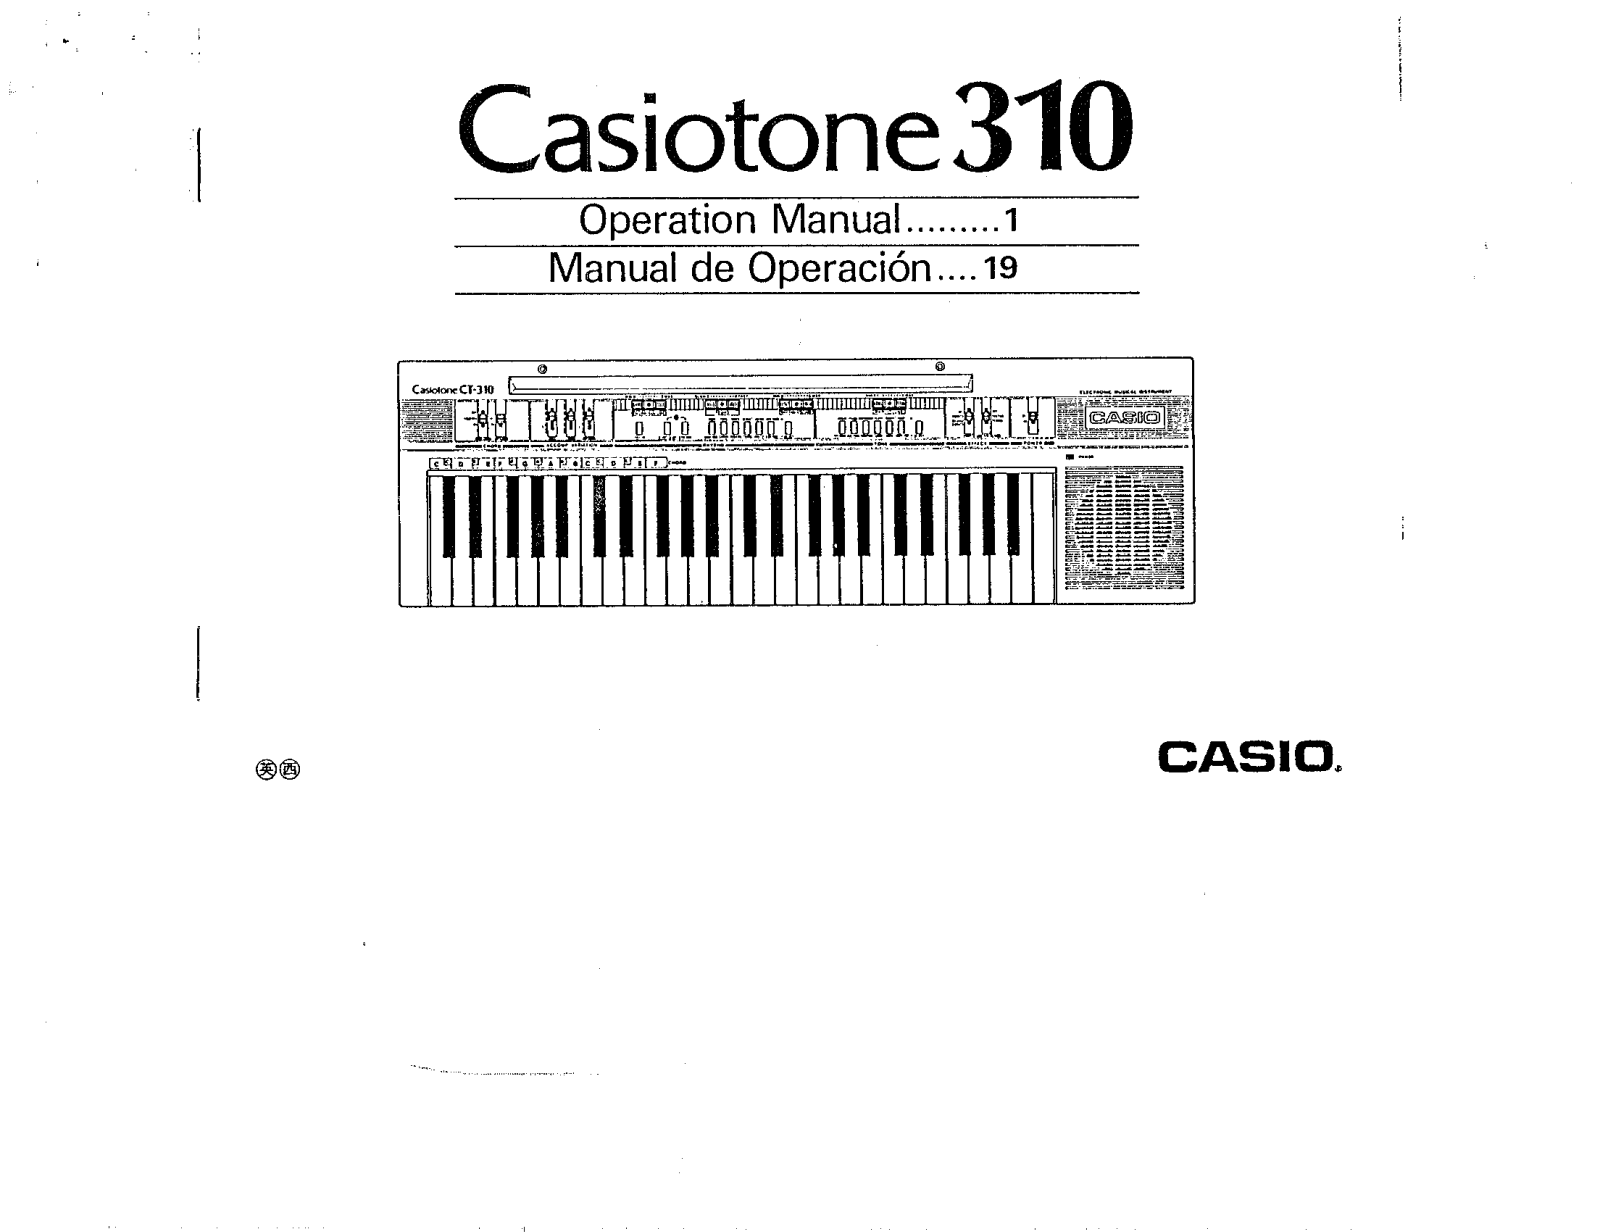 Casio CASIOTONE 310 Manual